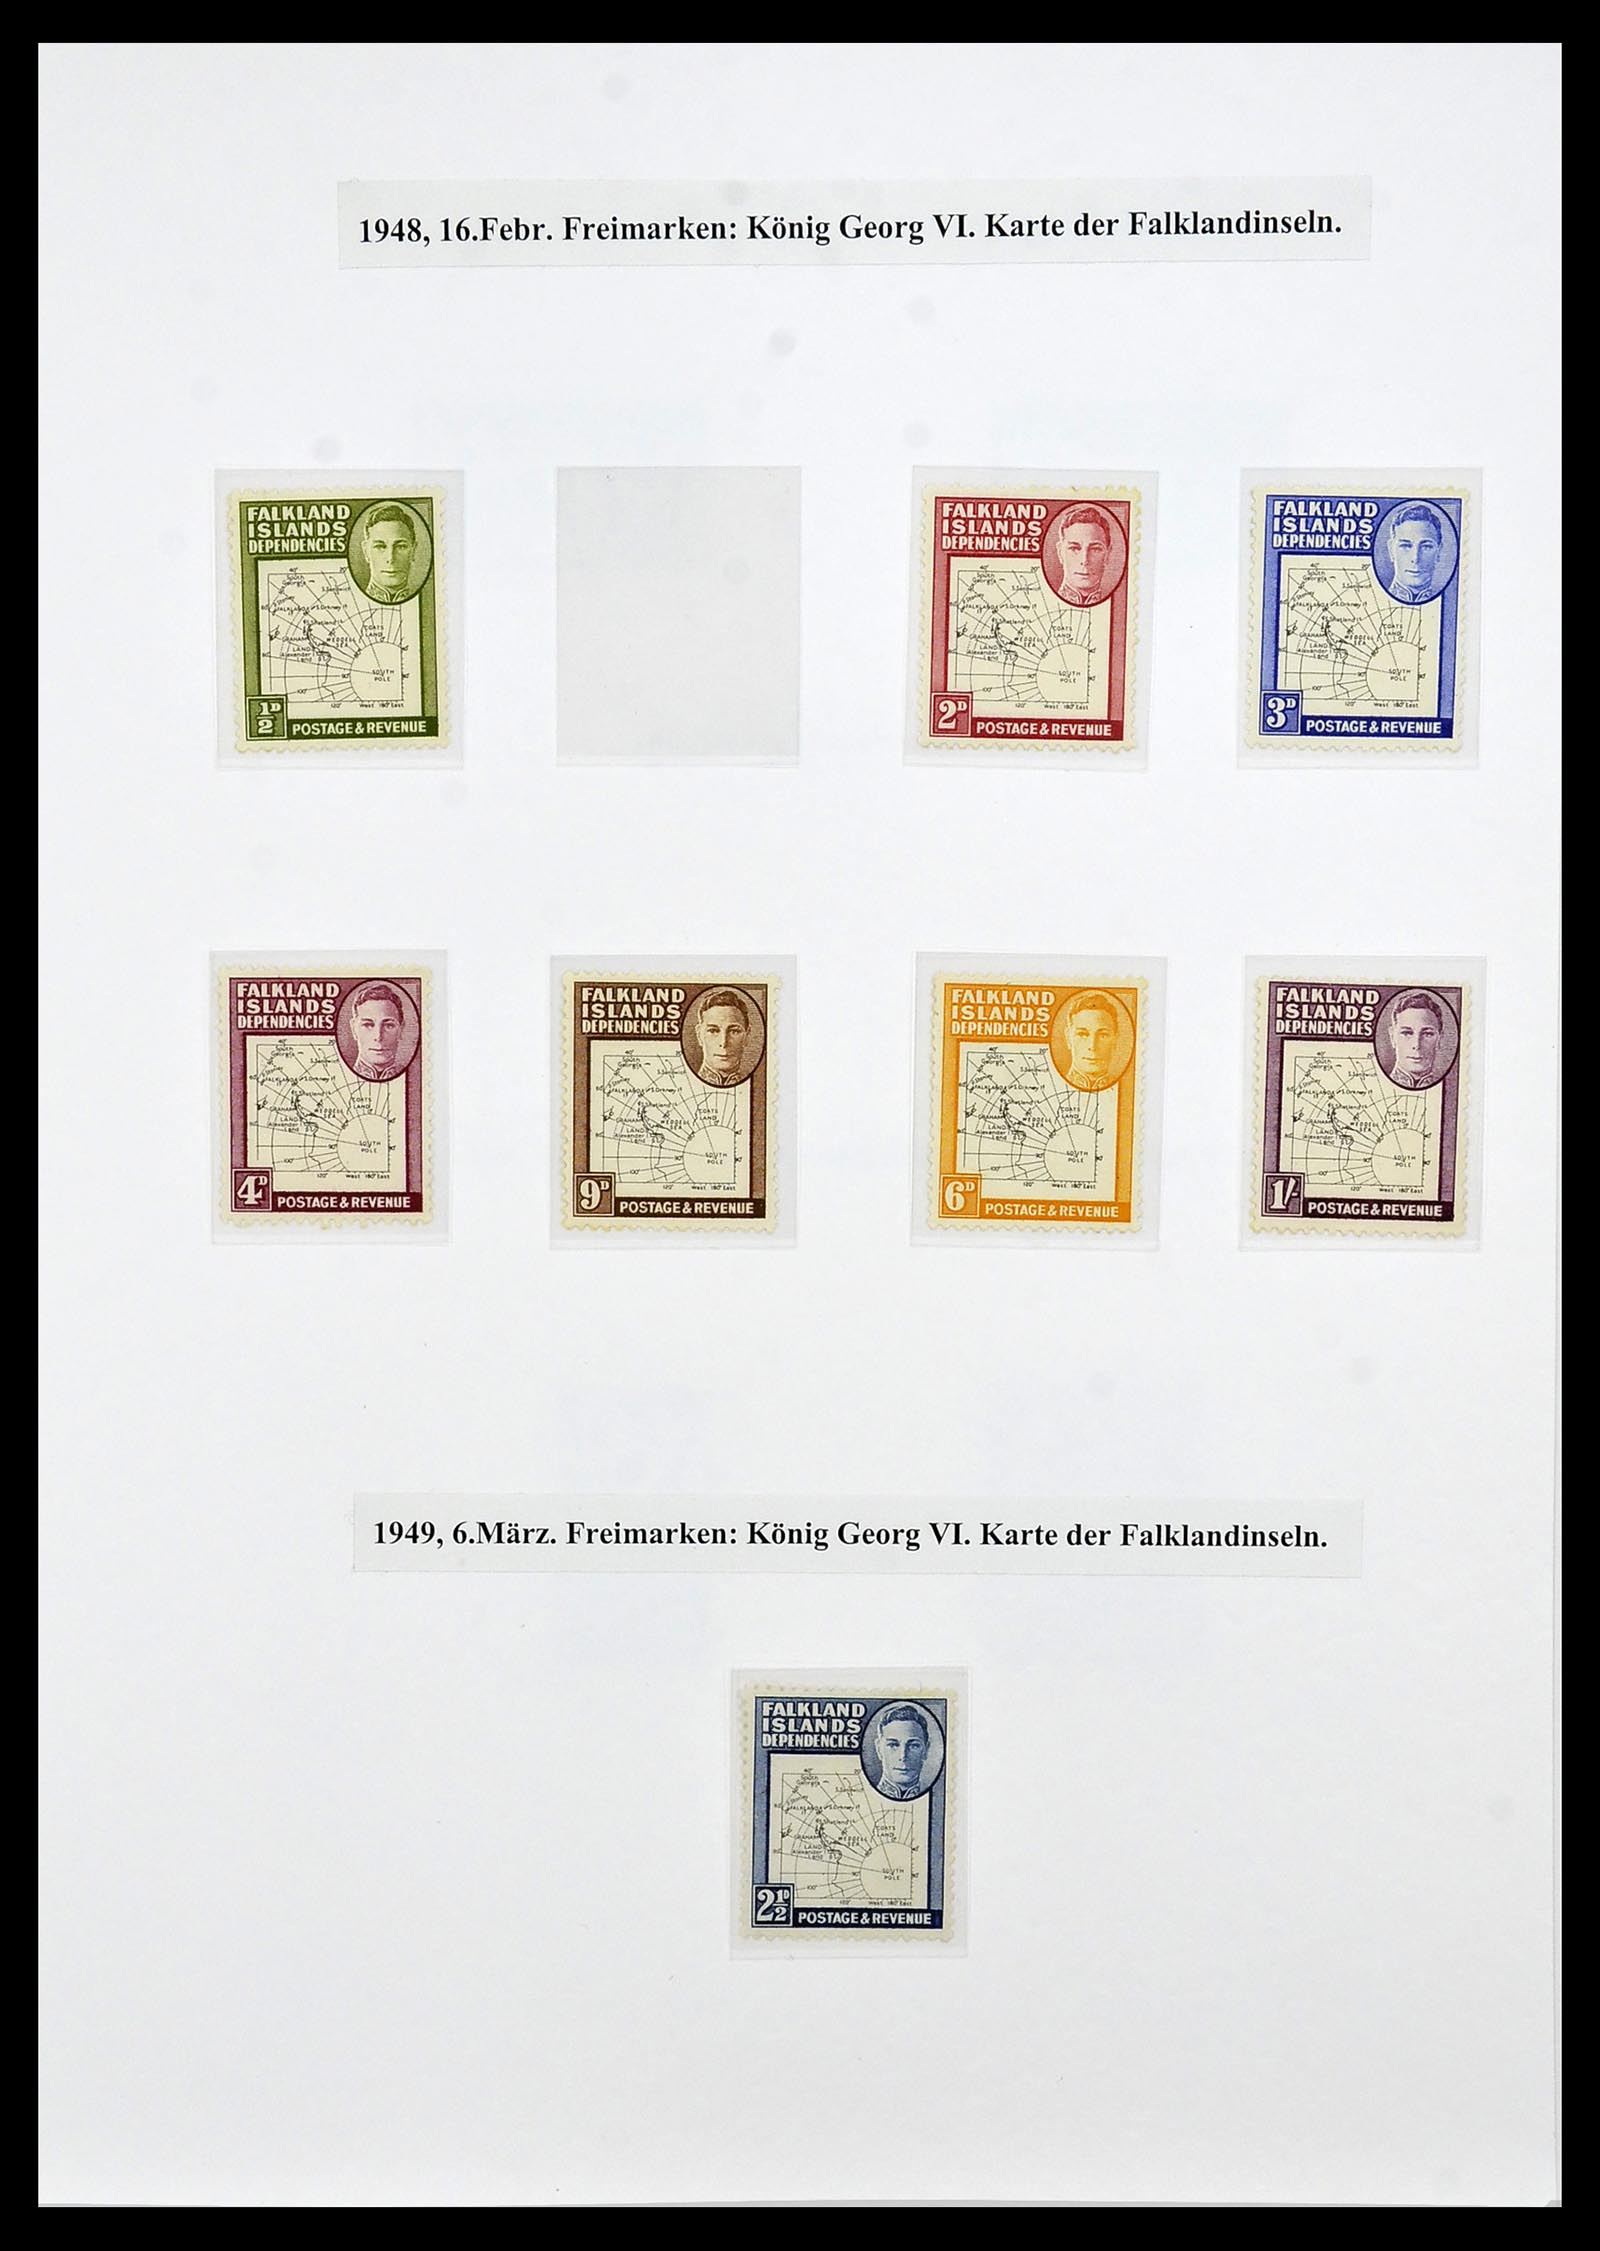 34222 007 - Stamp collection 34222 Falkland Dependencies 1891-1987.